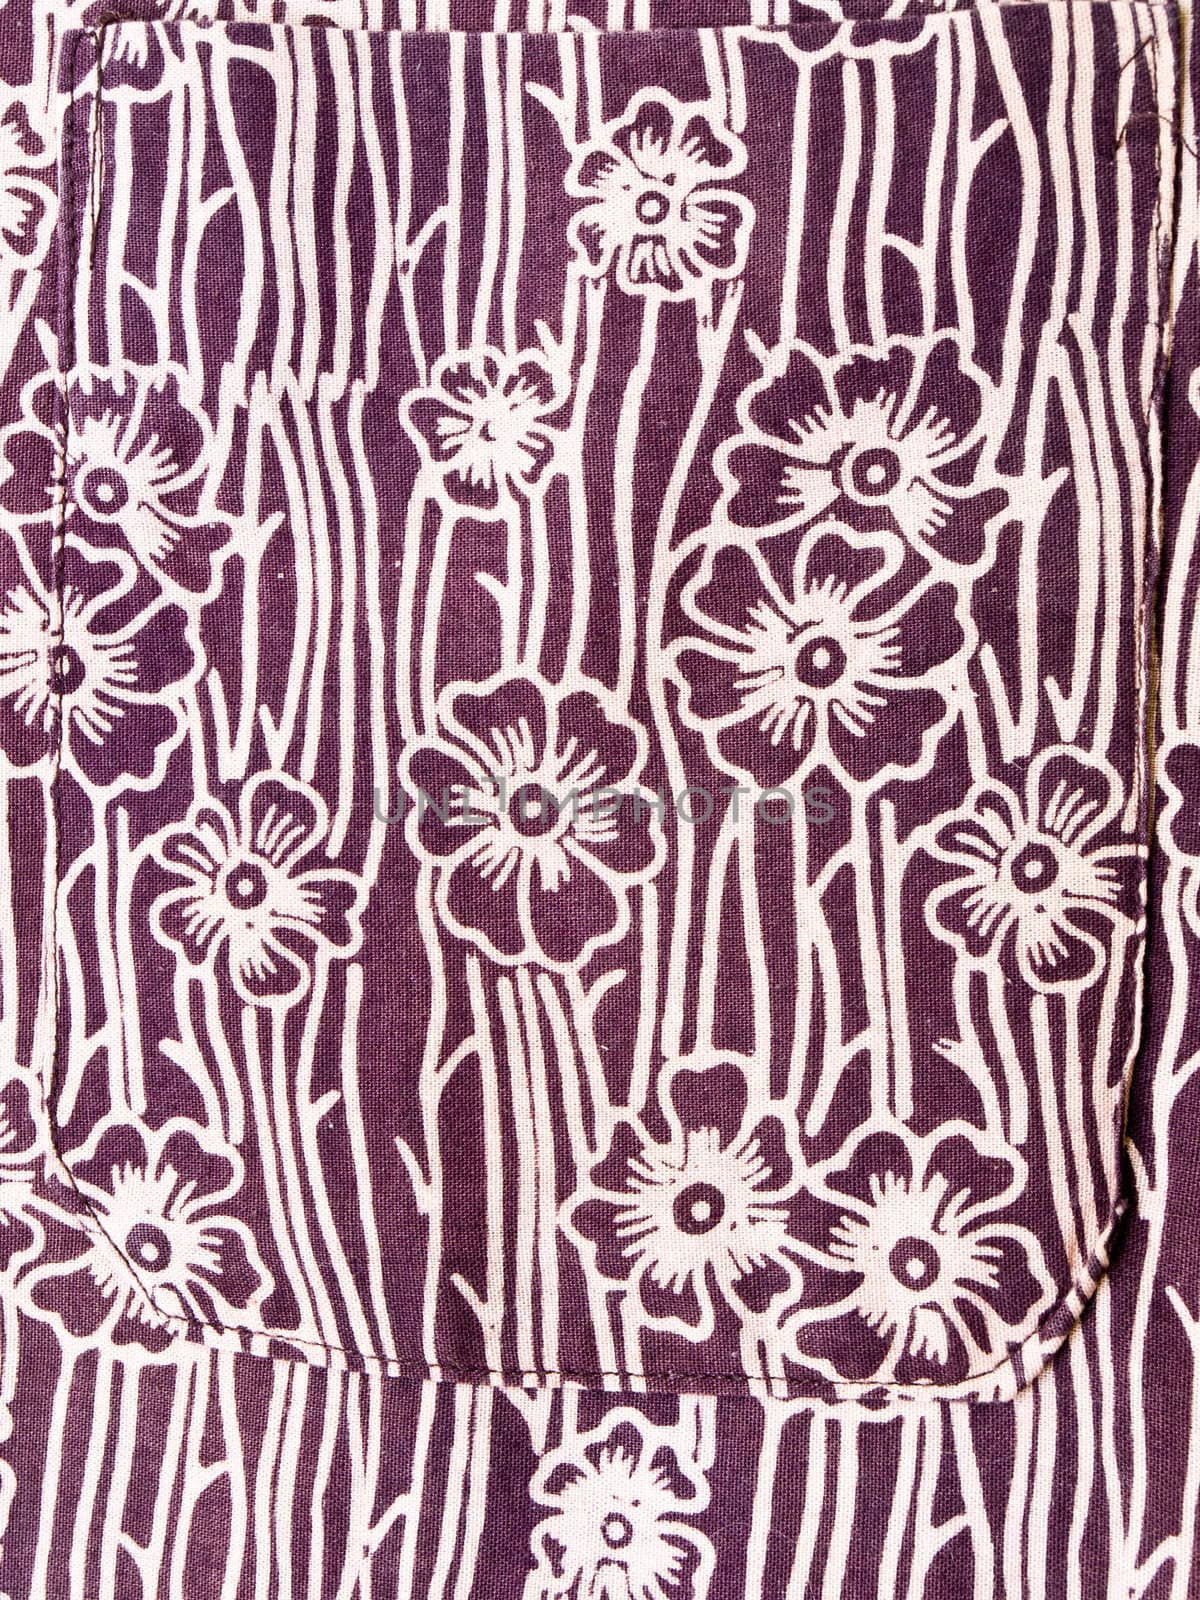 Floral brown batik background from Yogyakarta, Indonesia by gururugu